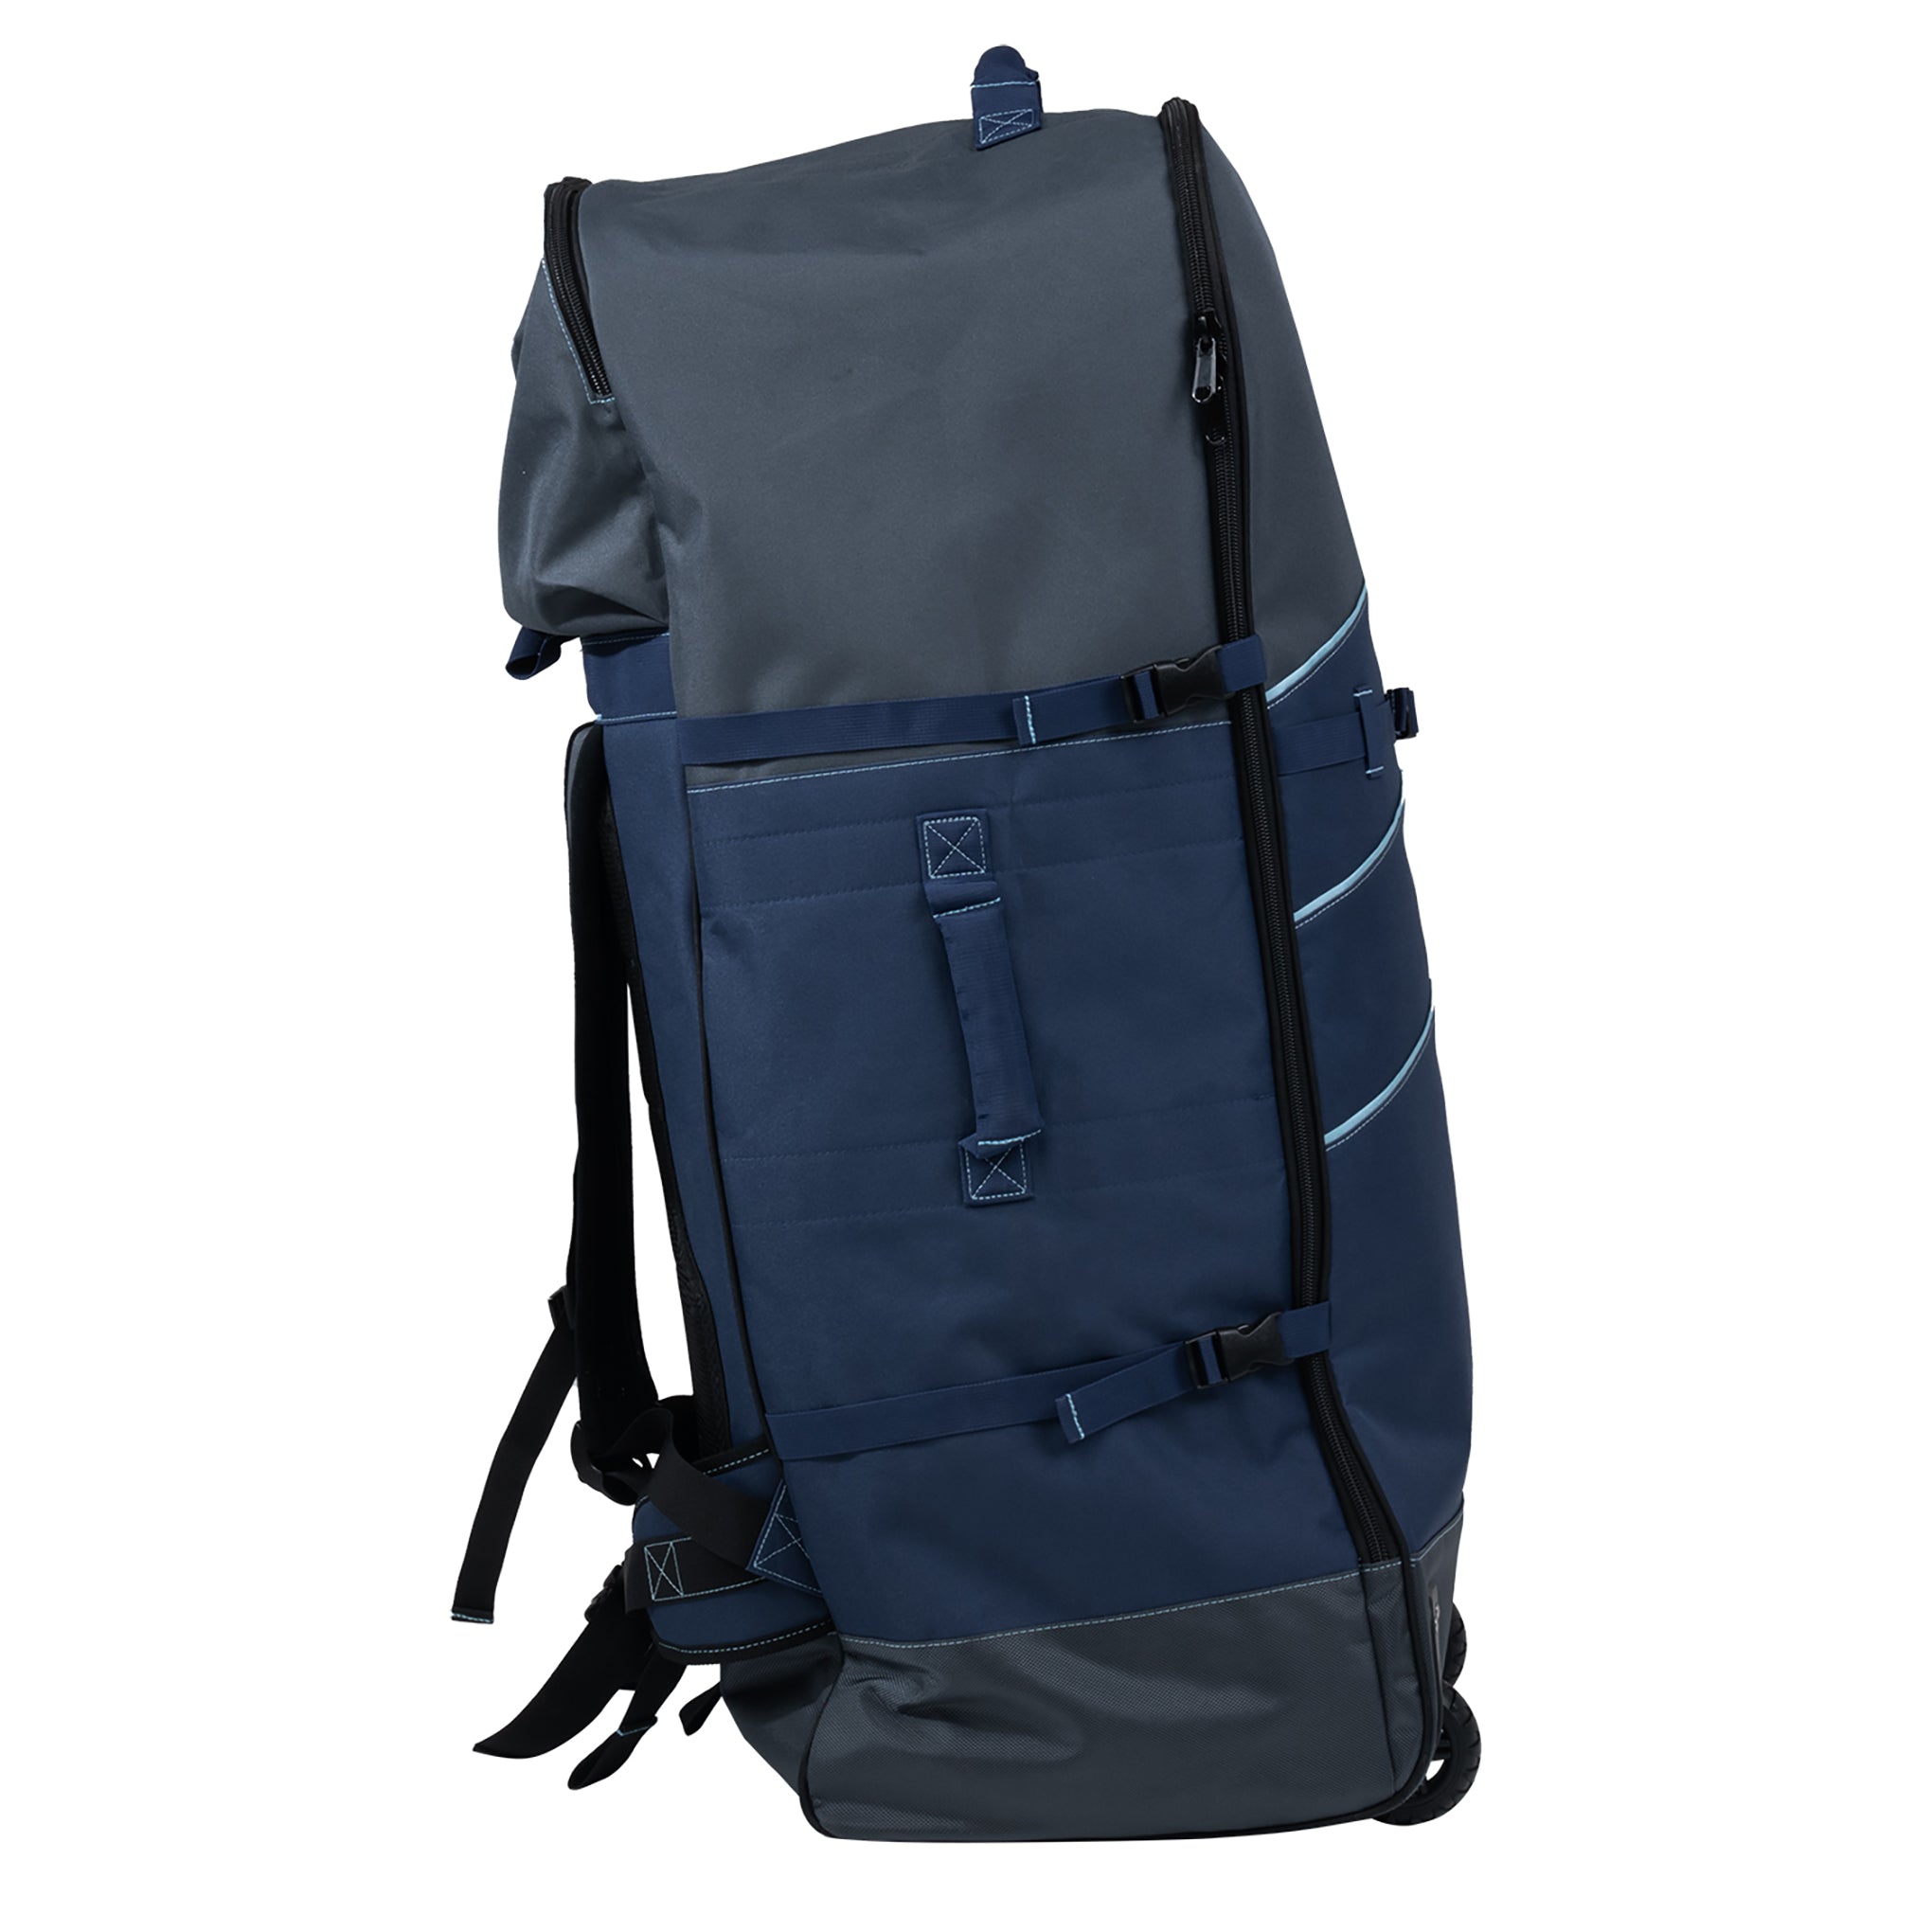 Pro Series Wheelie Backpack Side View